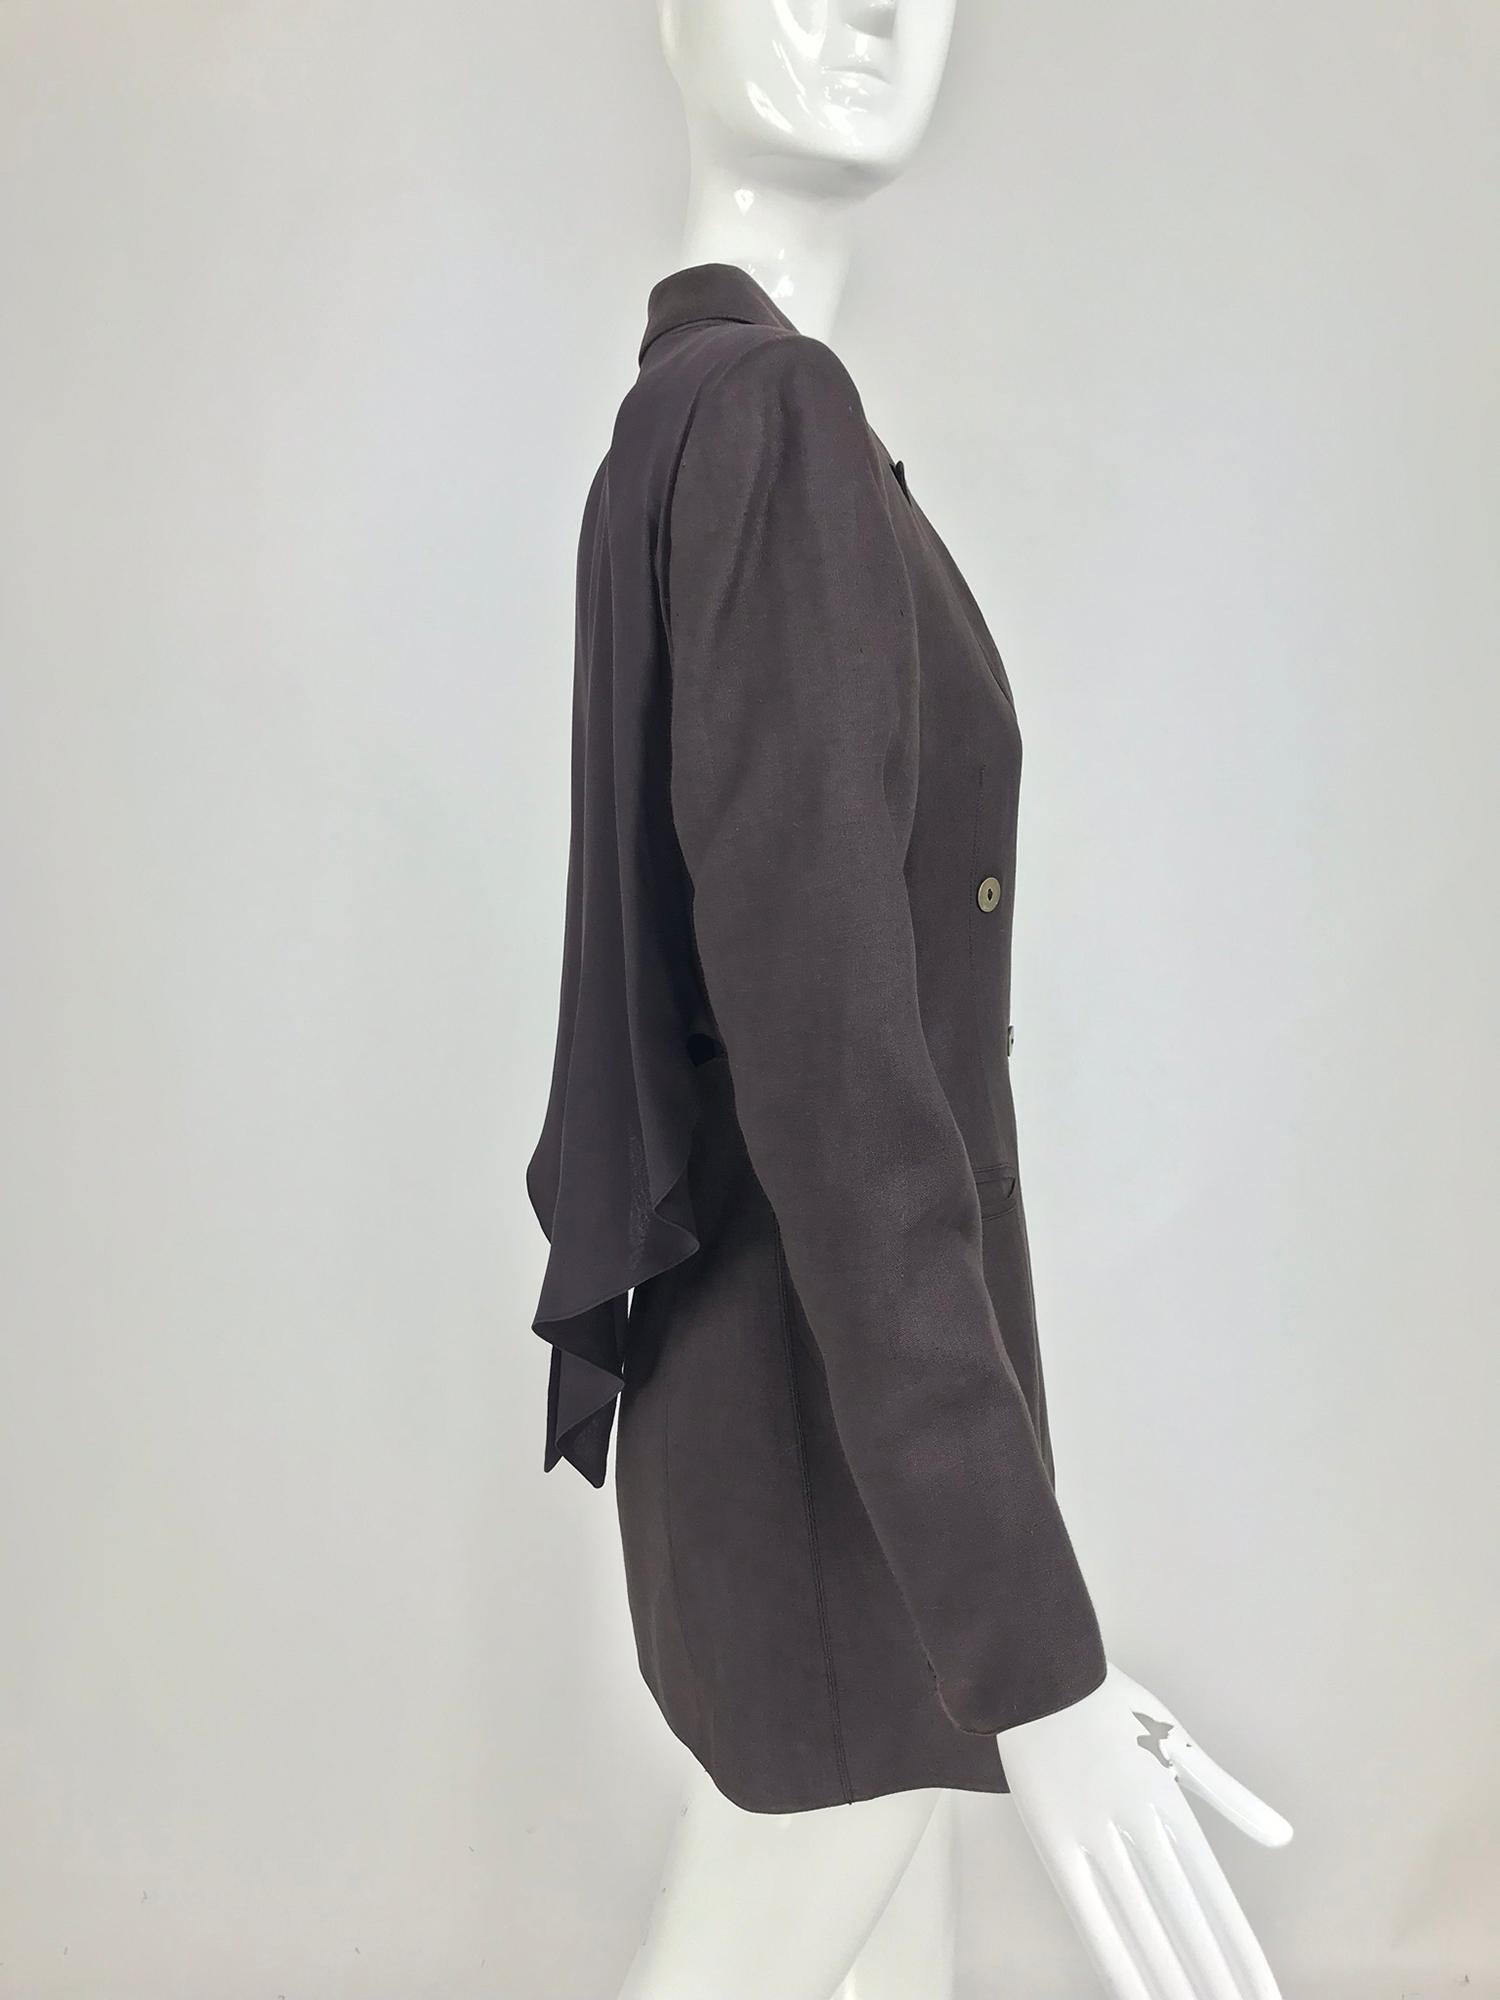 Claude Montana Brown Linen Drape Open Back Jacket 1980s For Sale 1